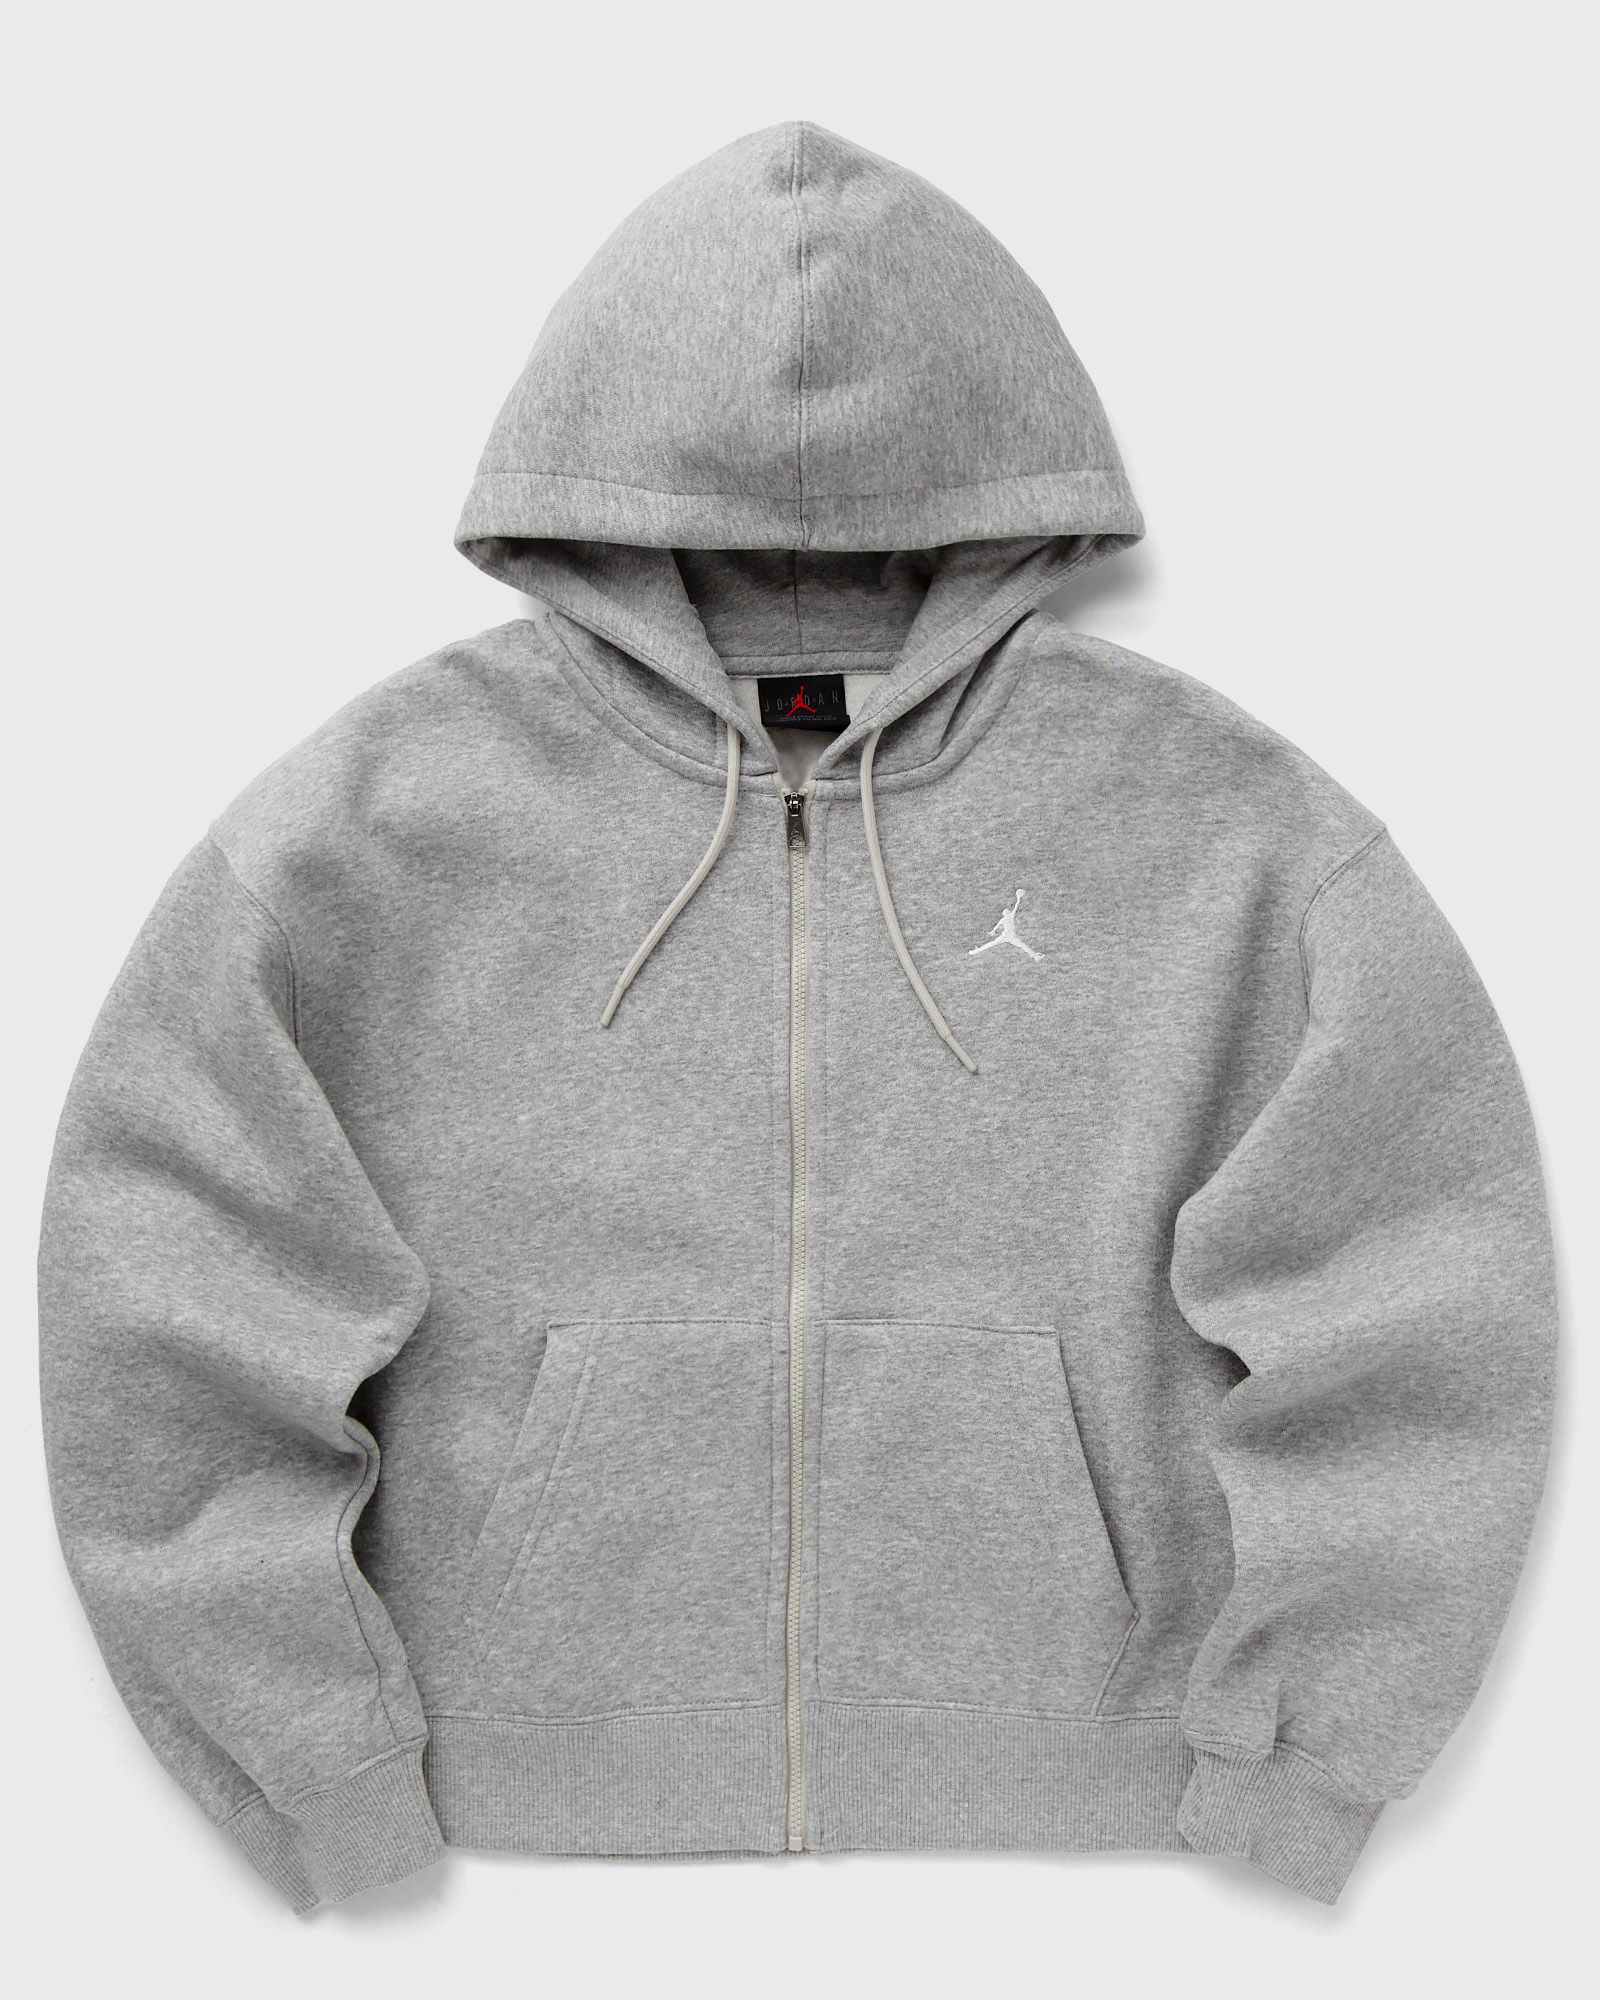 Jordan - wmns brooklyn fleece full-zip hoodie women hoodies|zippers grey in größe:l